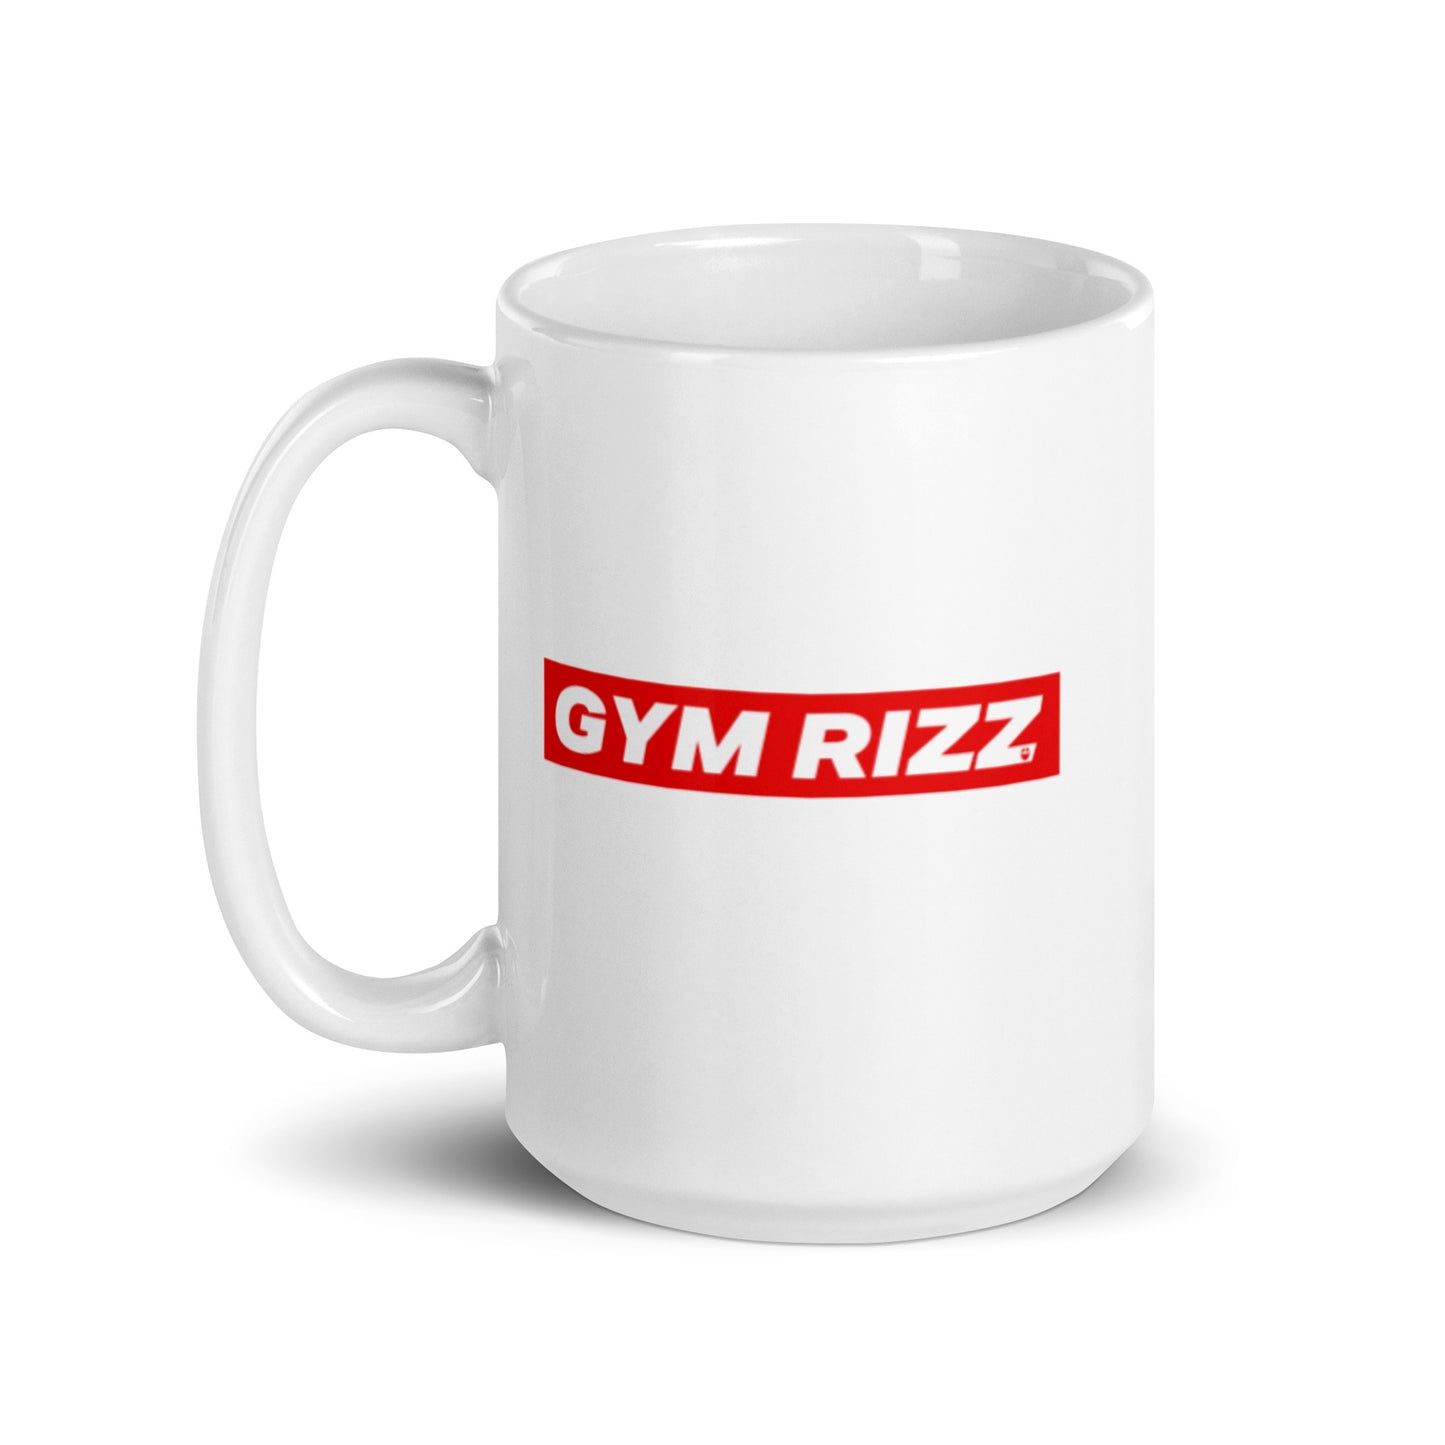 Gym Rizz Mug